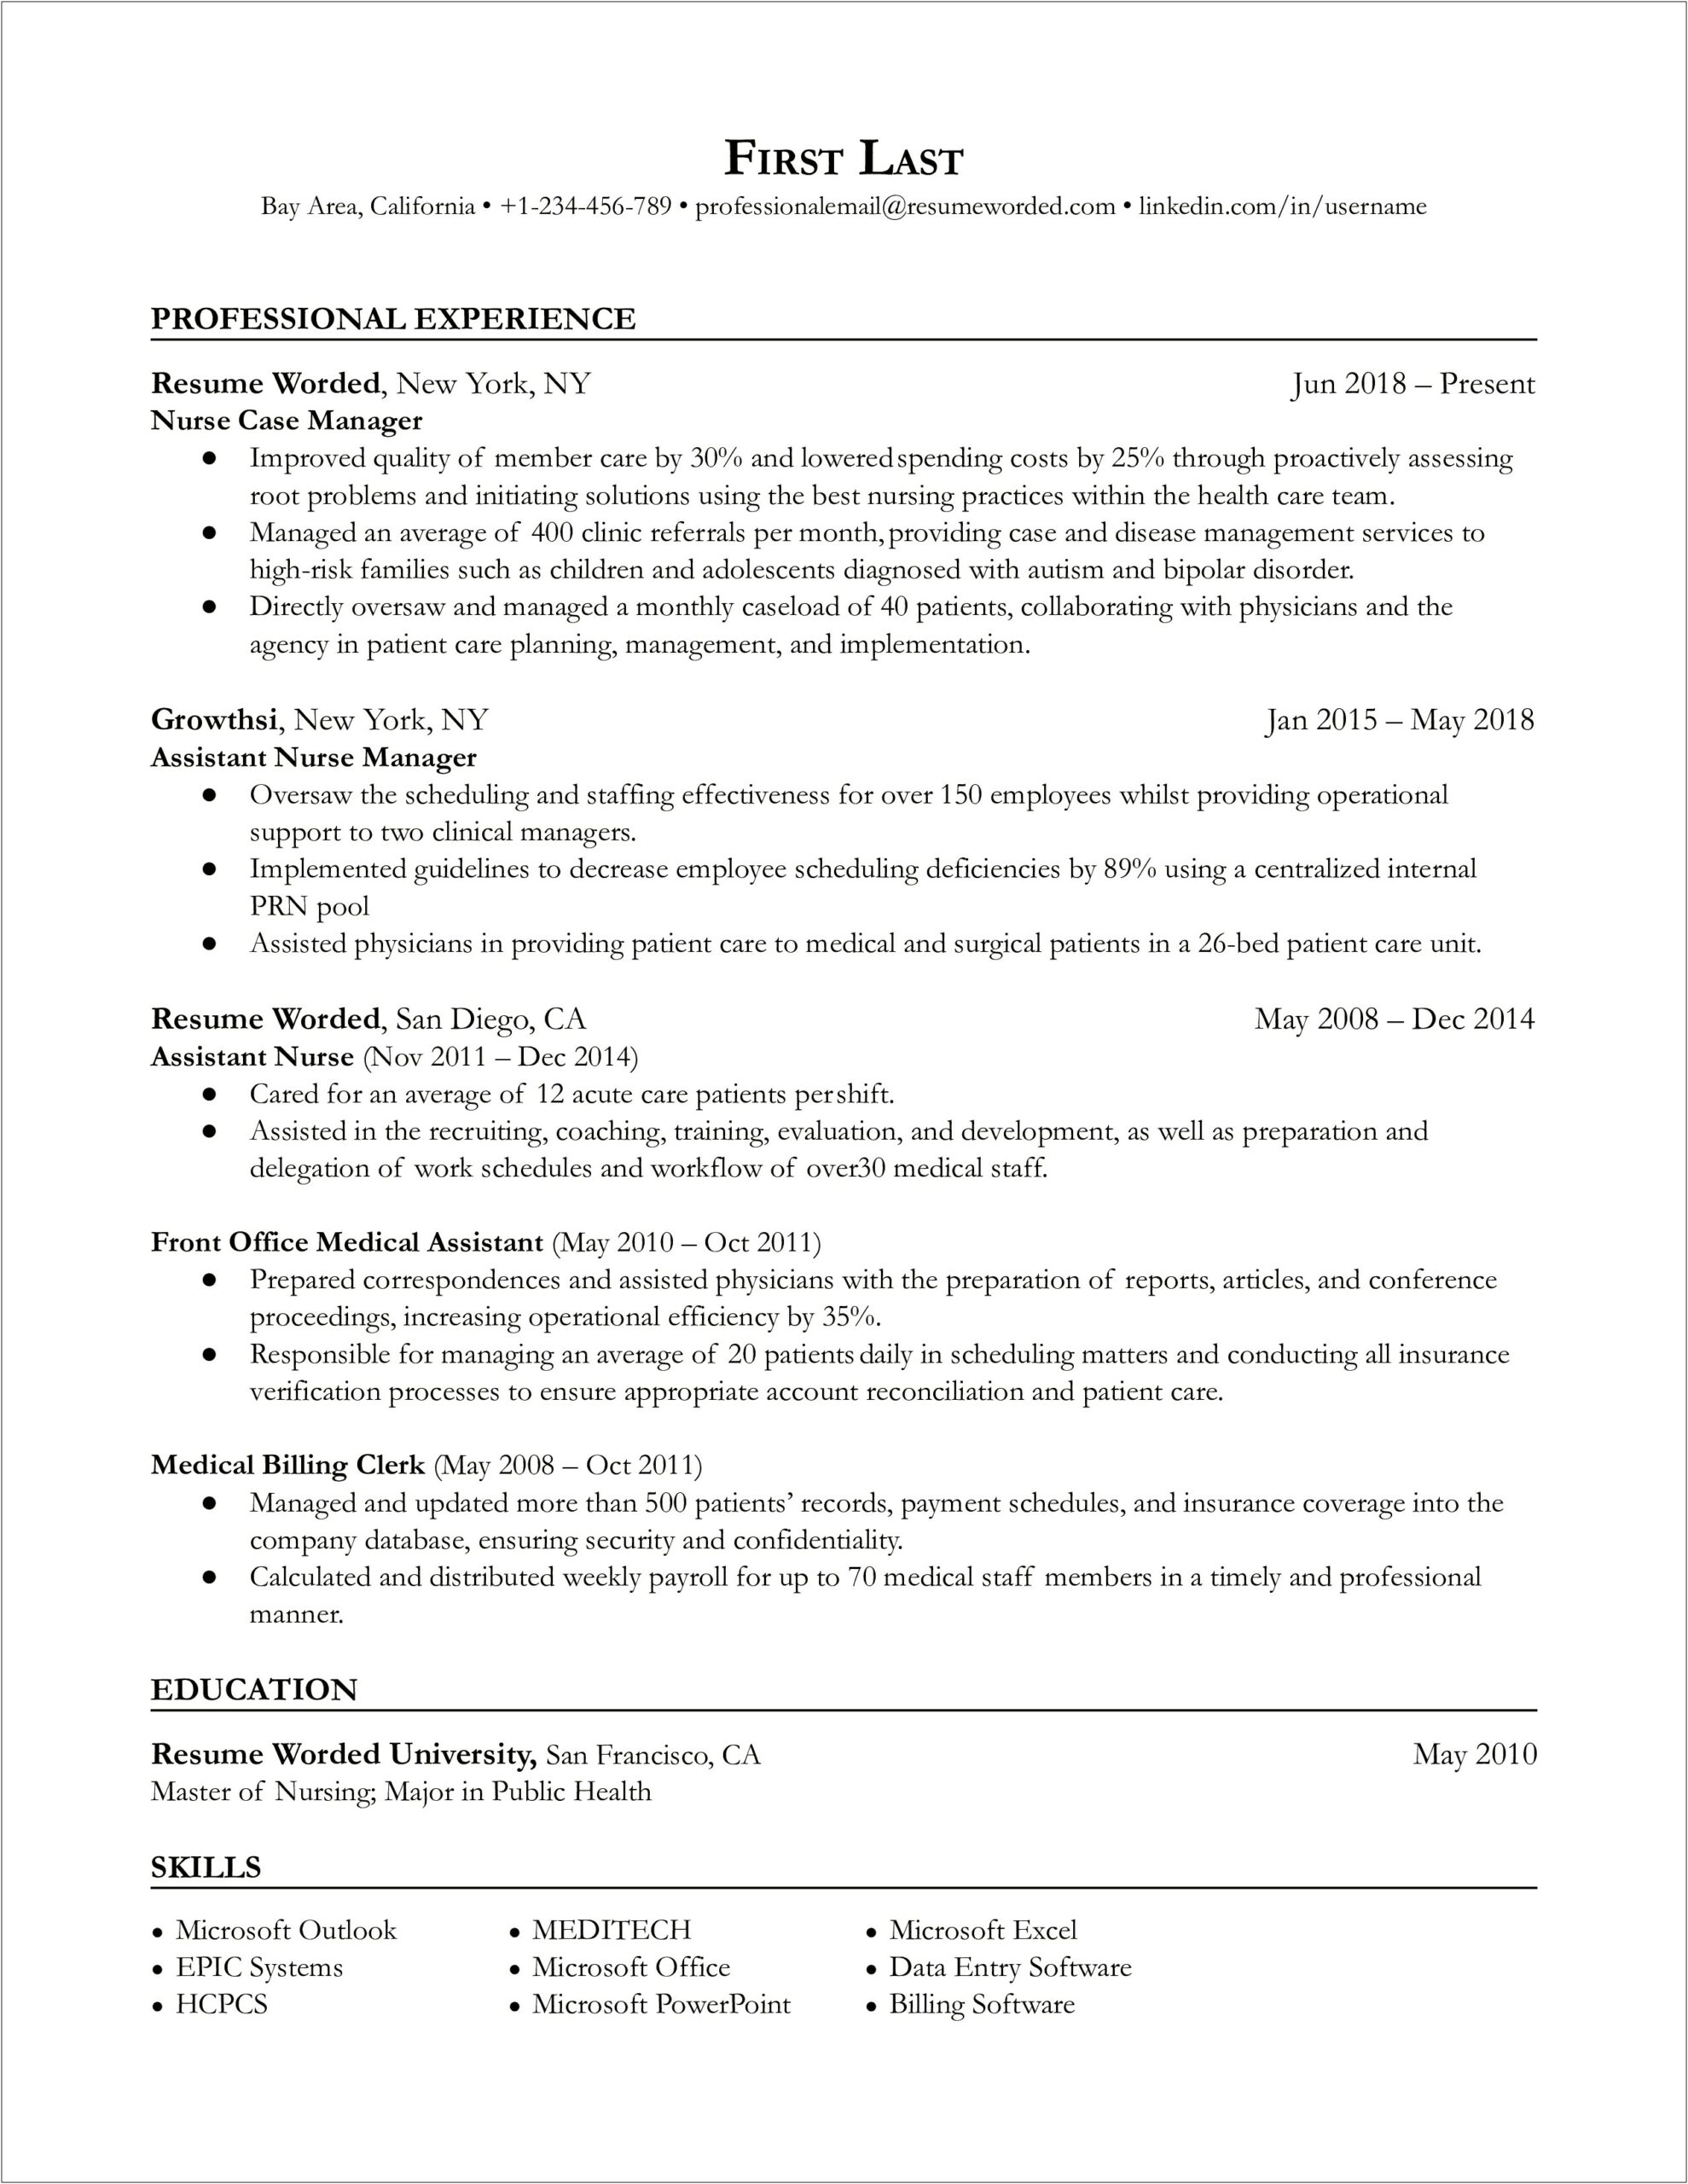 Sample Resume For Assistant Nurse Manager Position